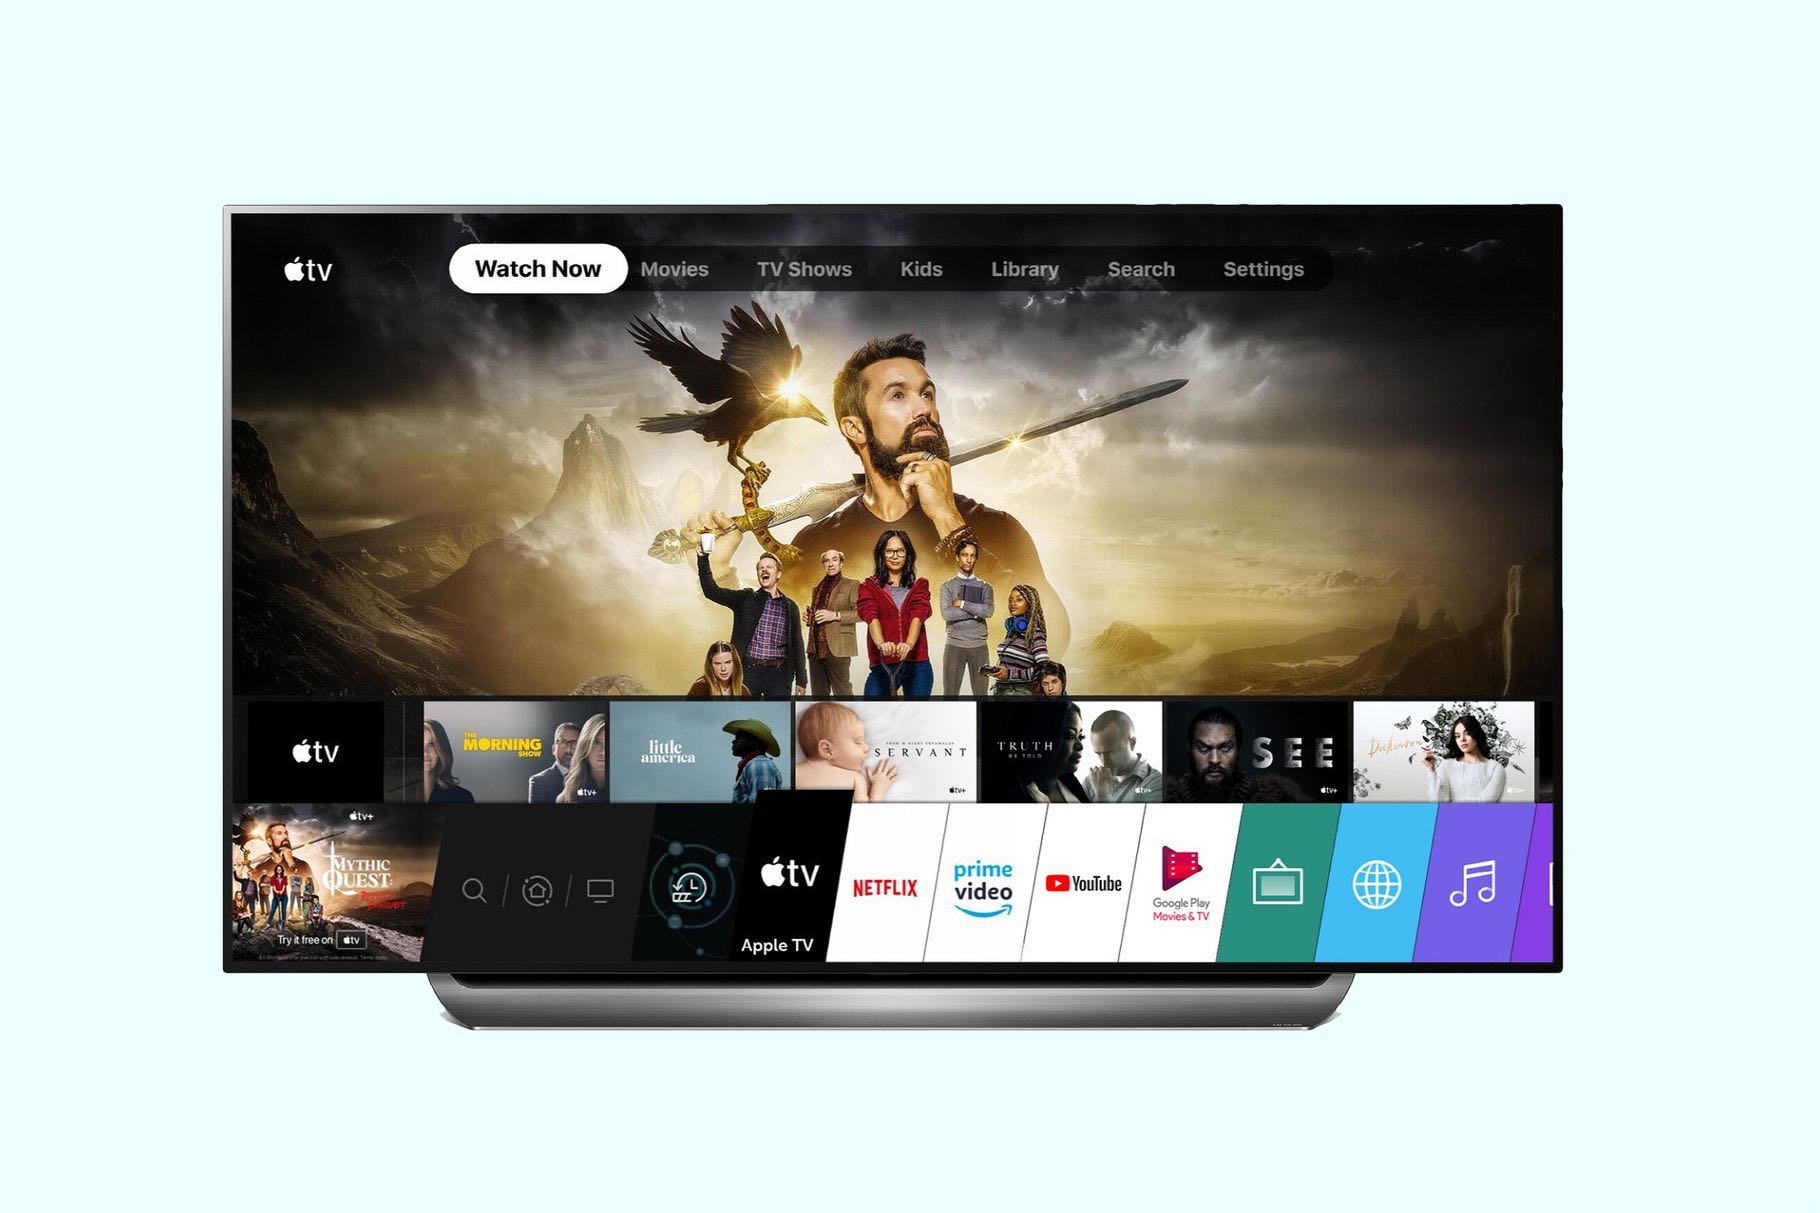 Приложение Apple TV появилось на телевизорах LG